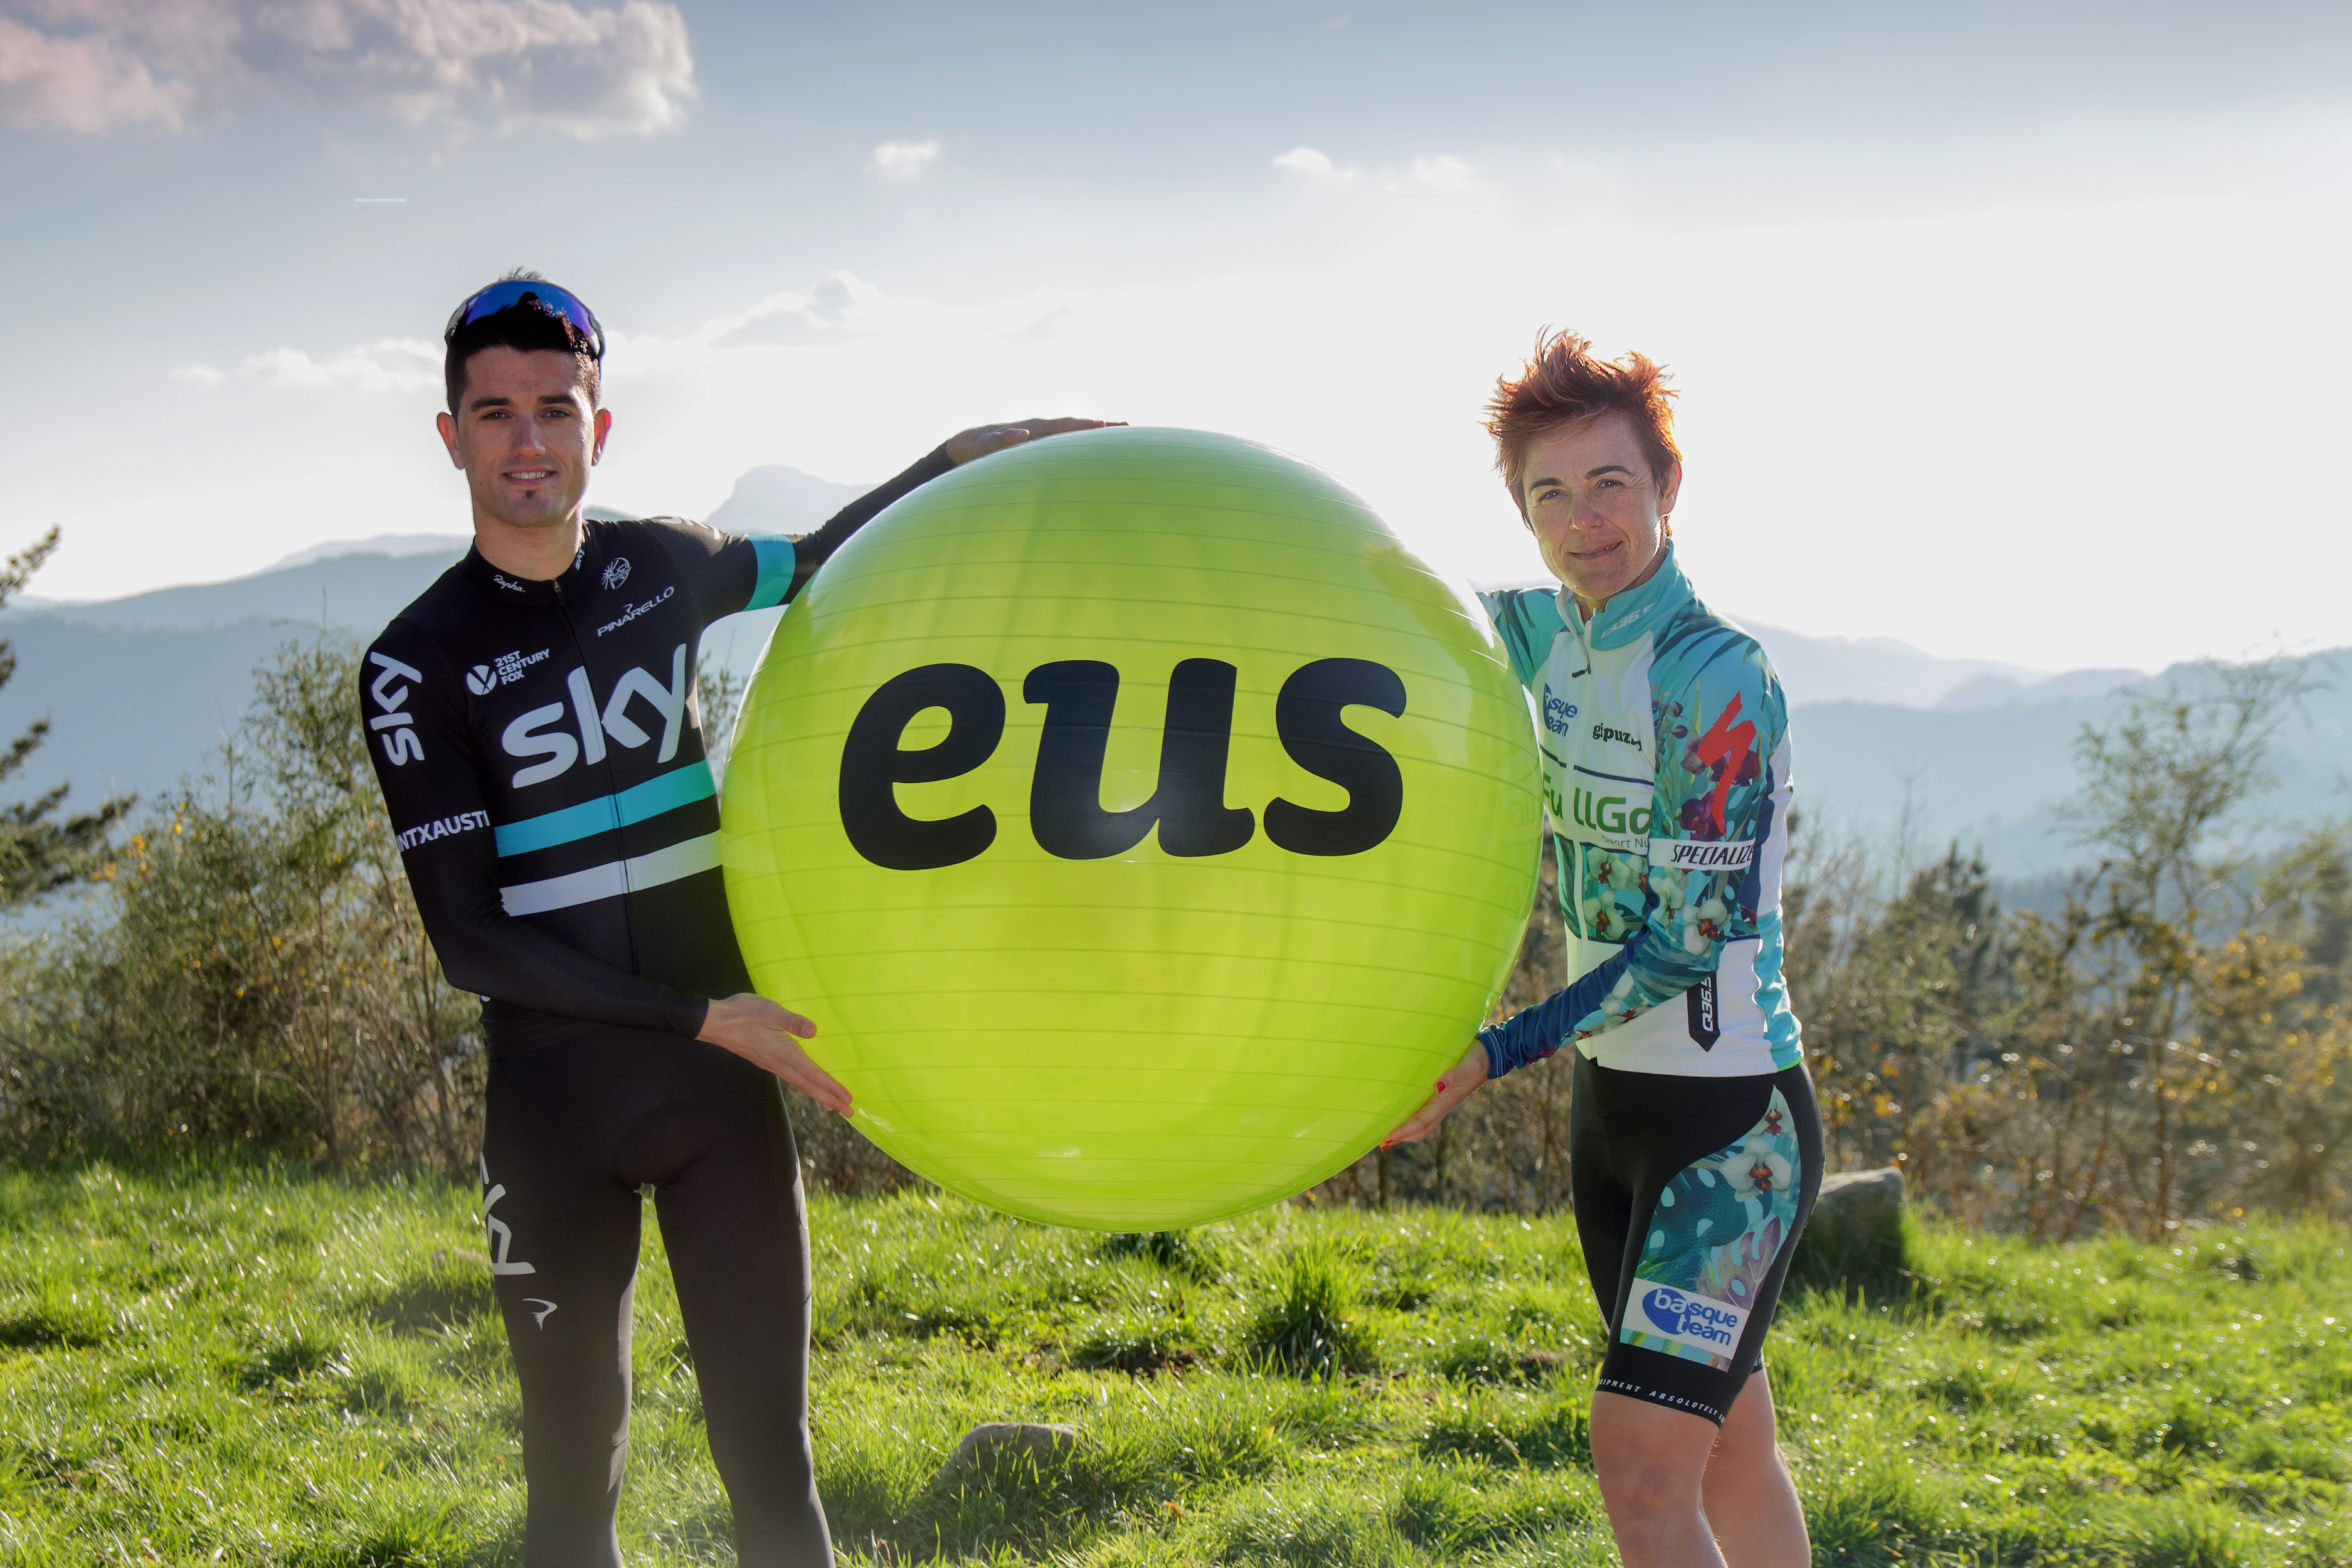 Basque cyclists Beñat Intxausti and Leire Olaberria